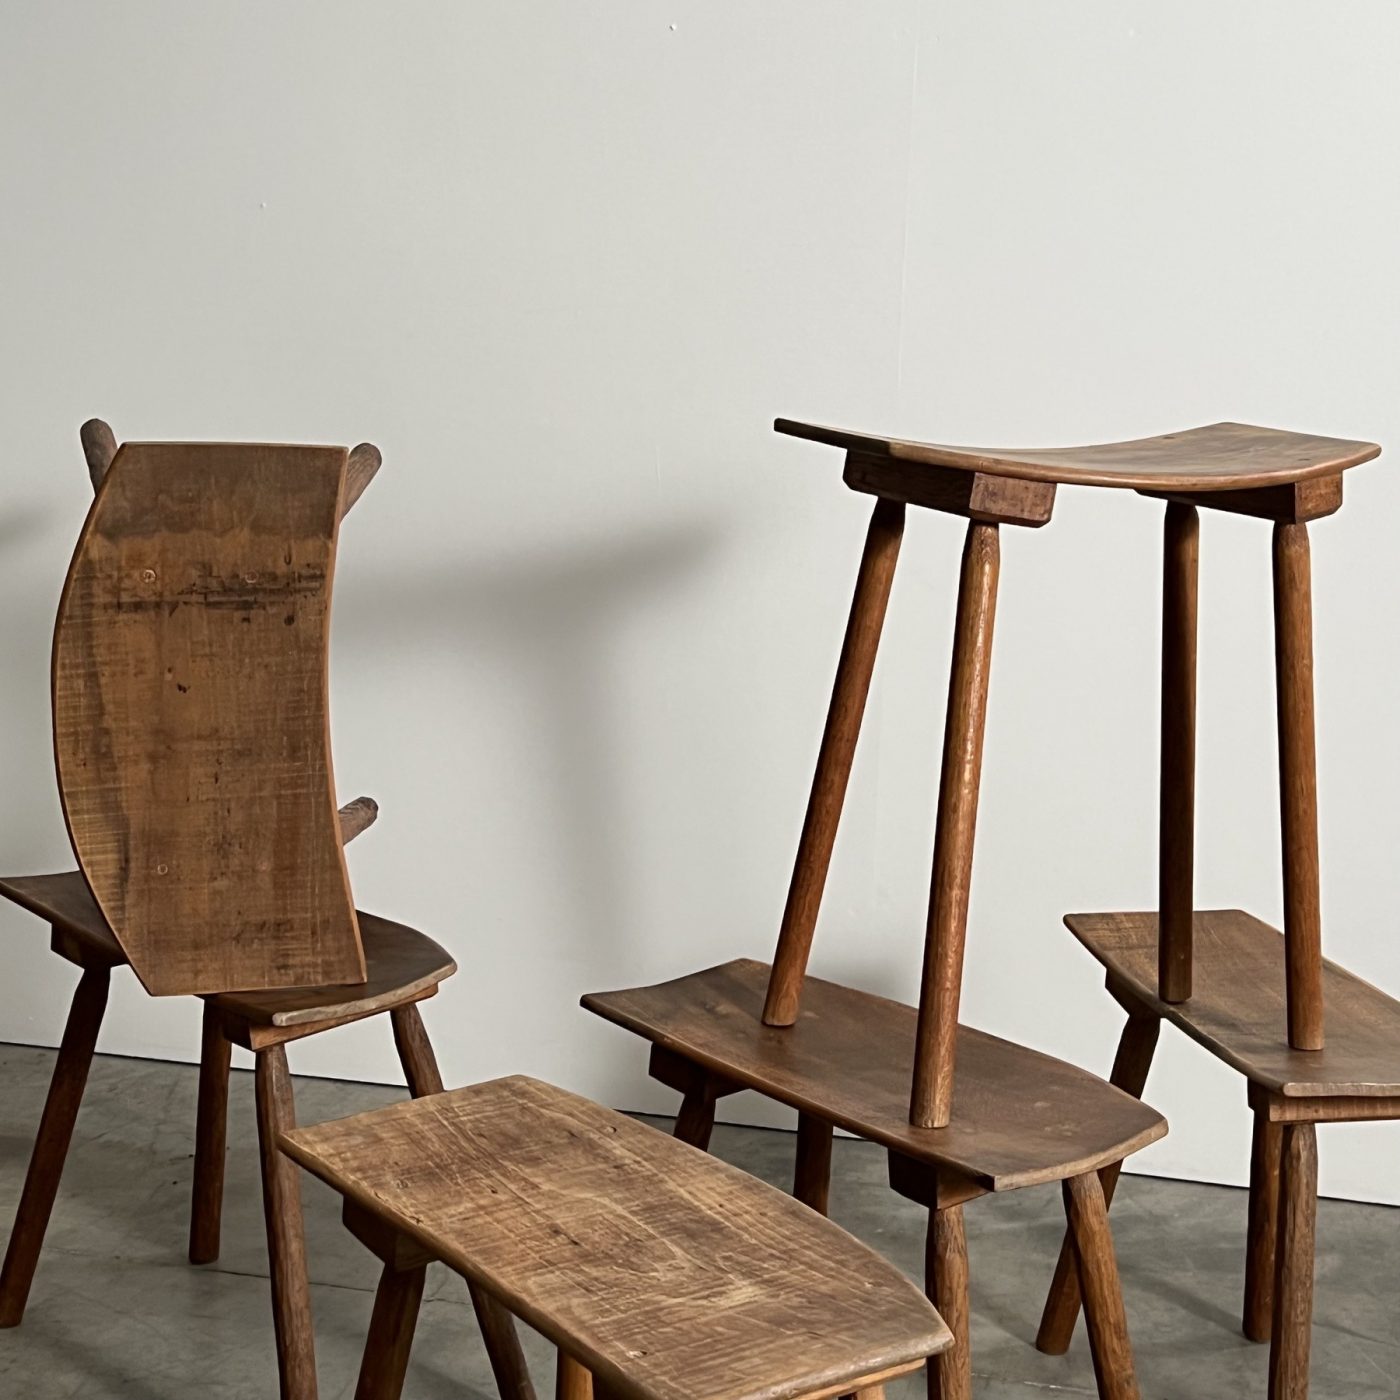 objet-vagabond-stools-collection0003